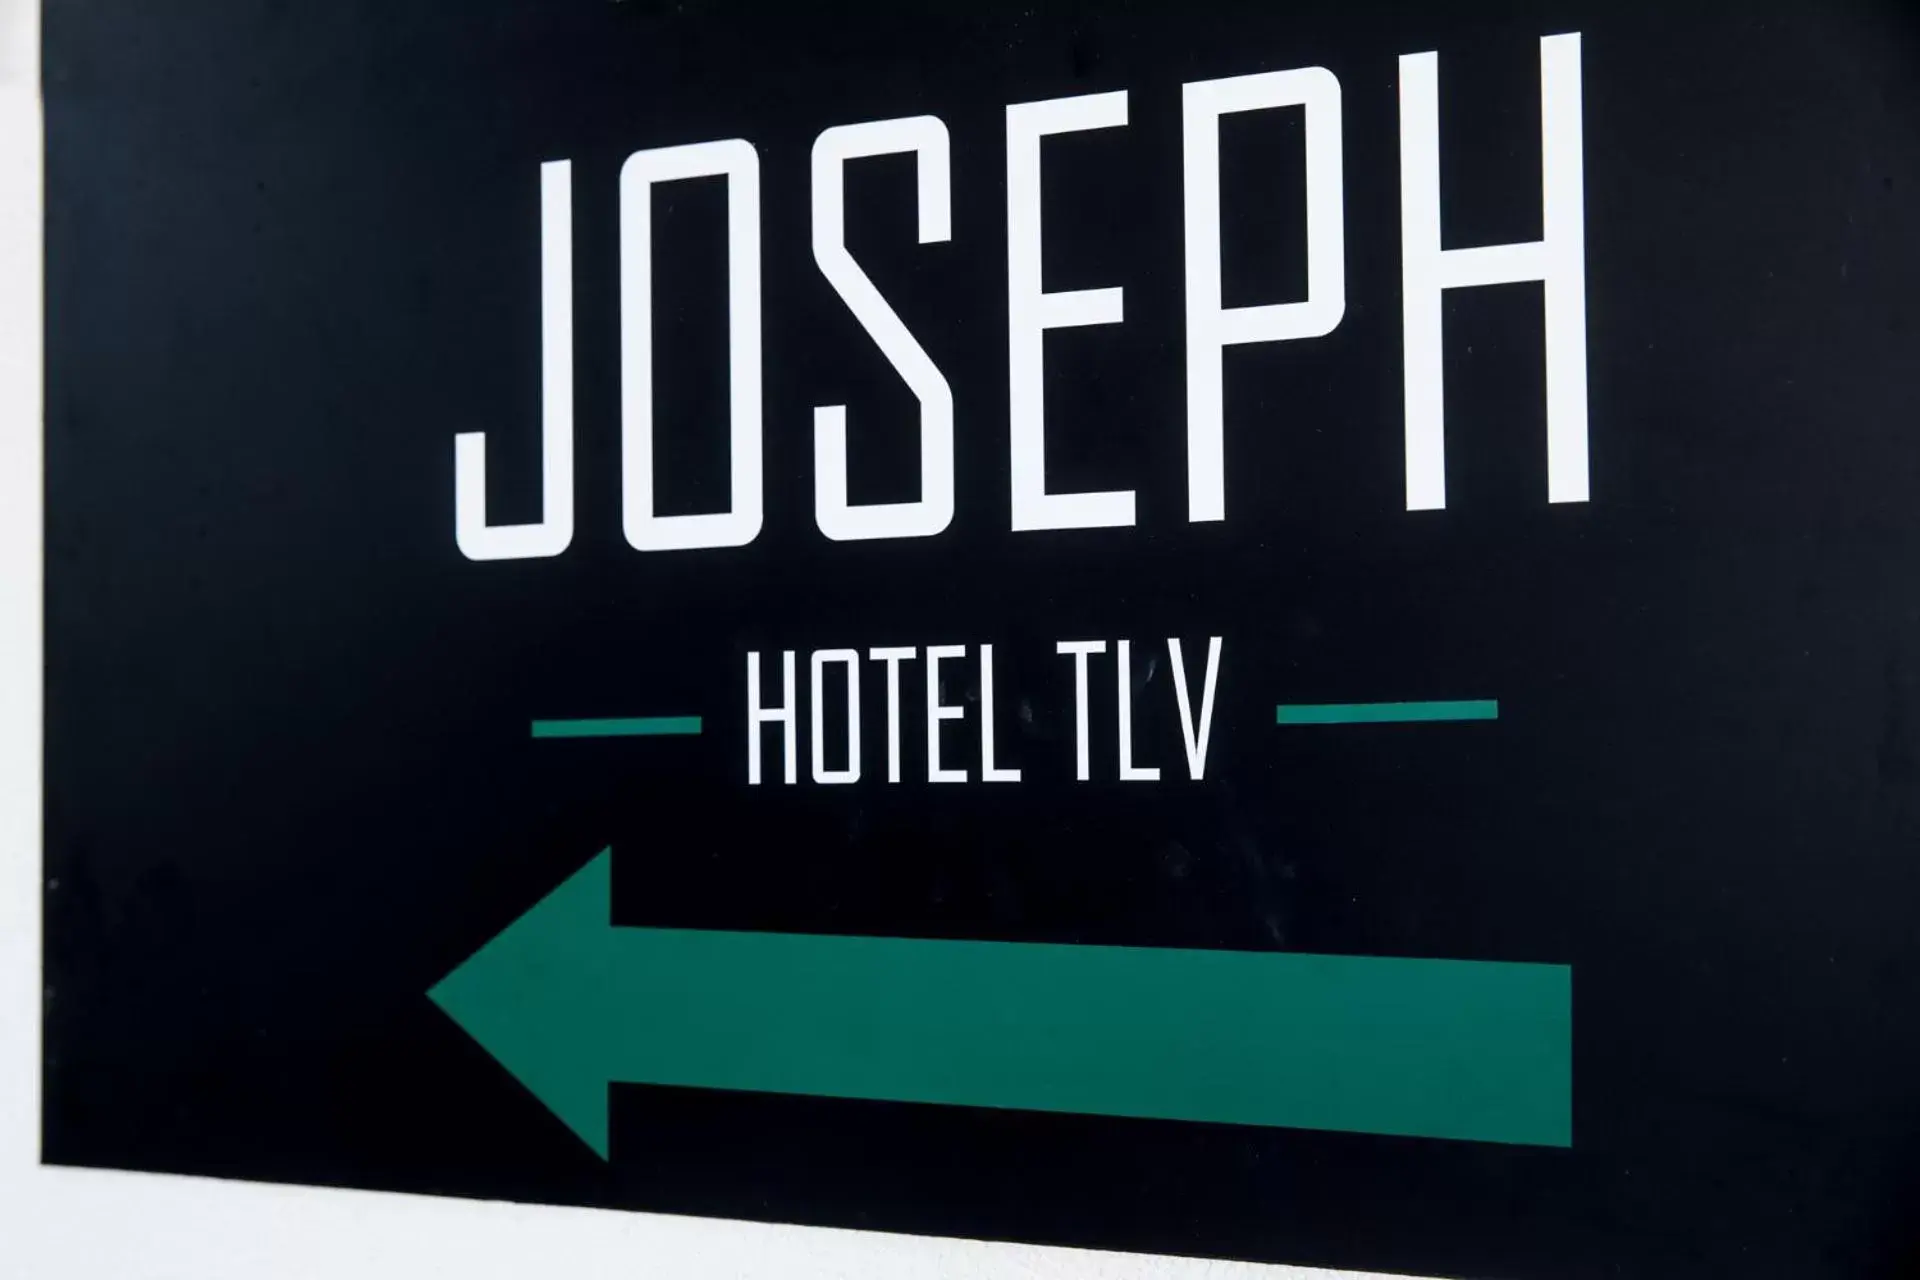 Property logo or sign in Joseph Hotel TLV